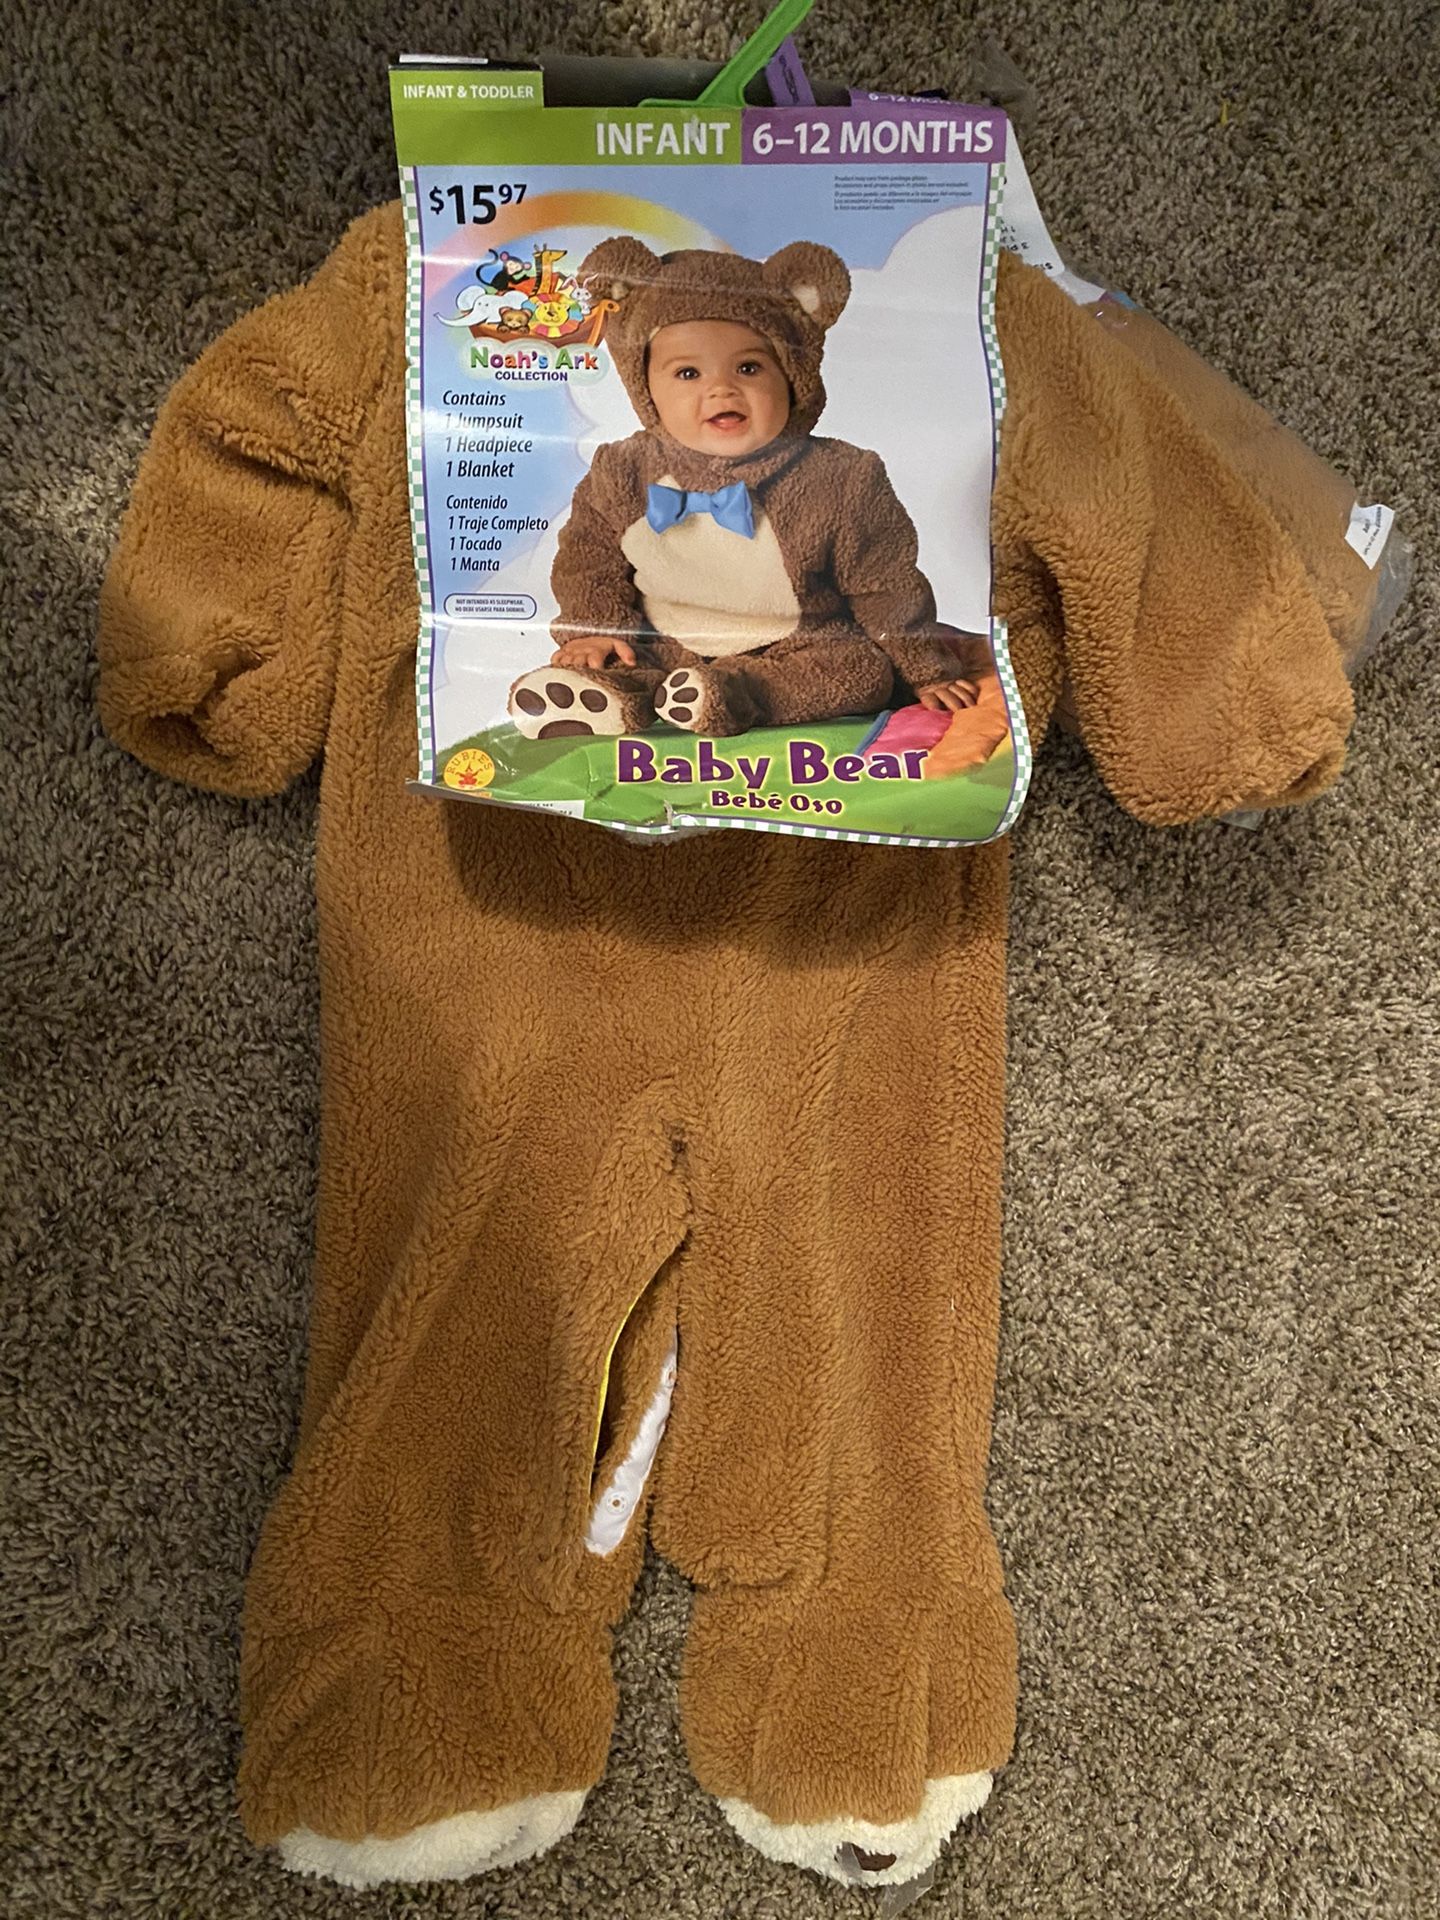 Baby bear costume